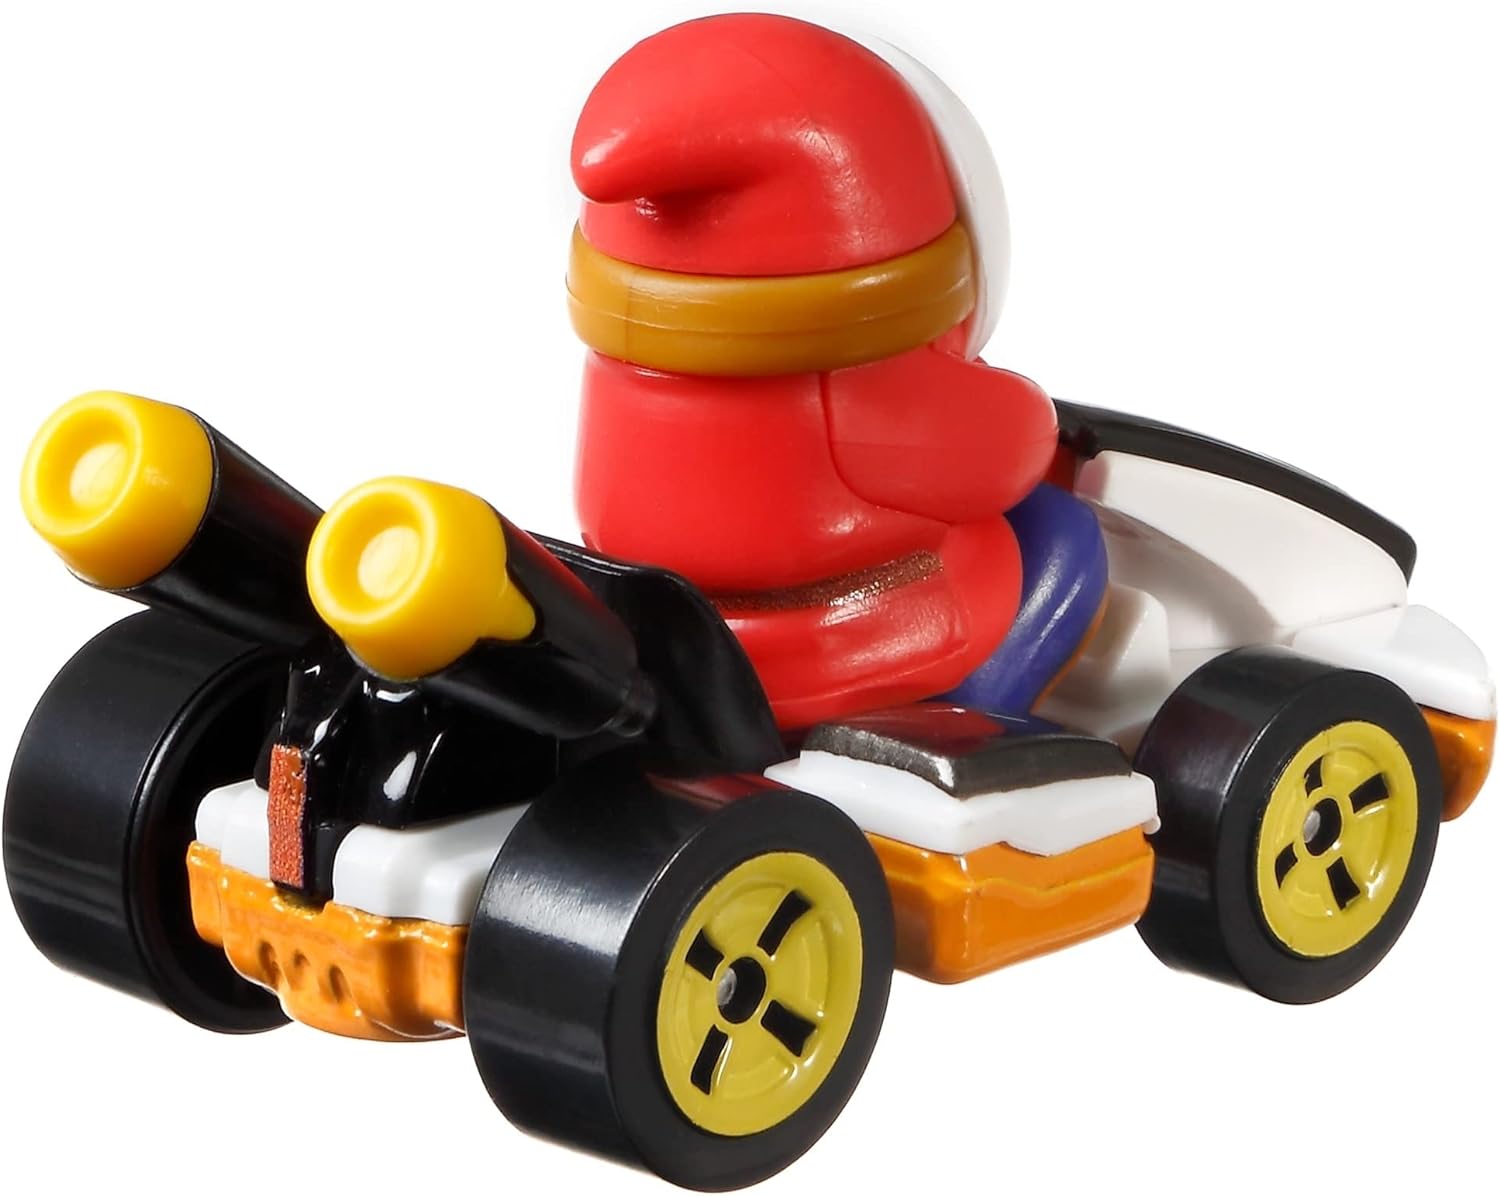 Mario Kart Hot Wheels - Shy Guy Tipo Timido (Standard Kart)